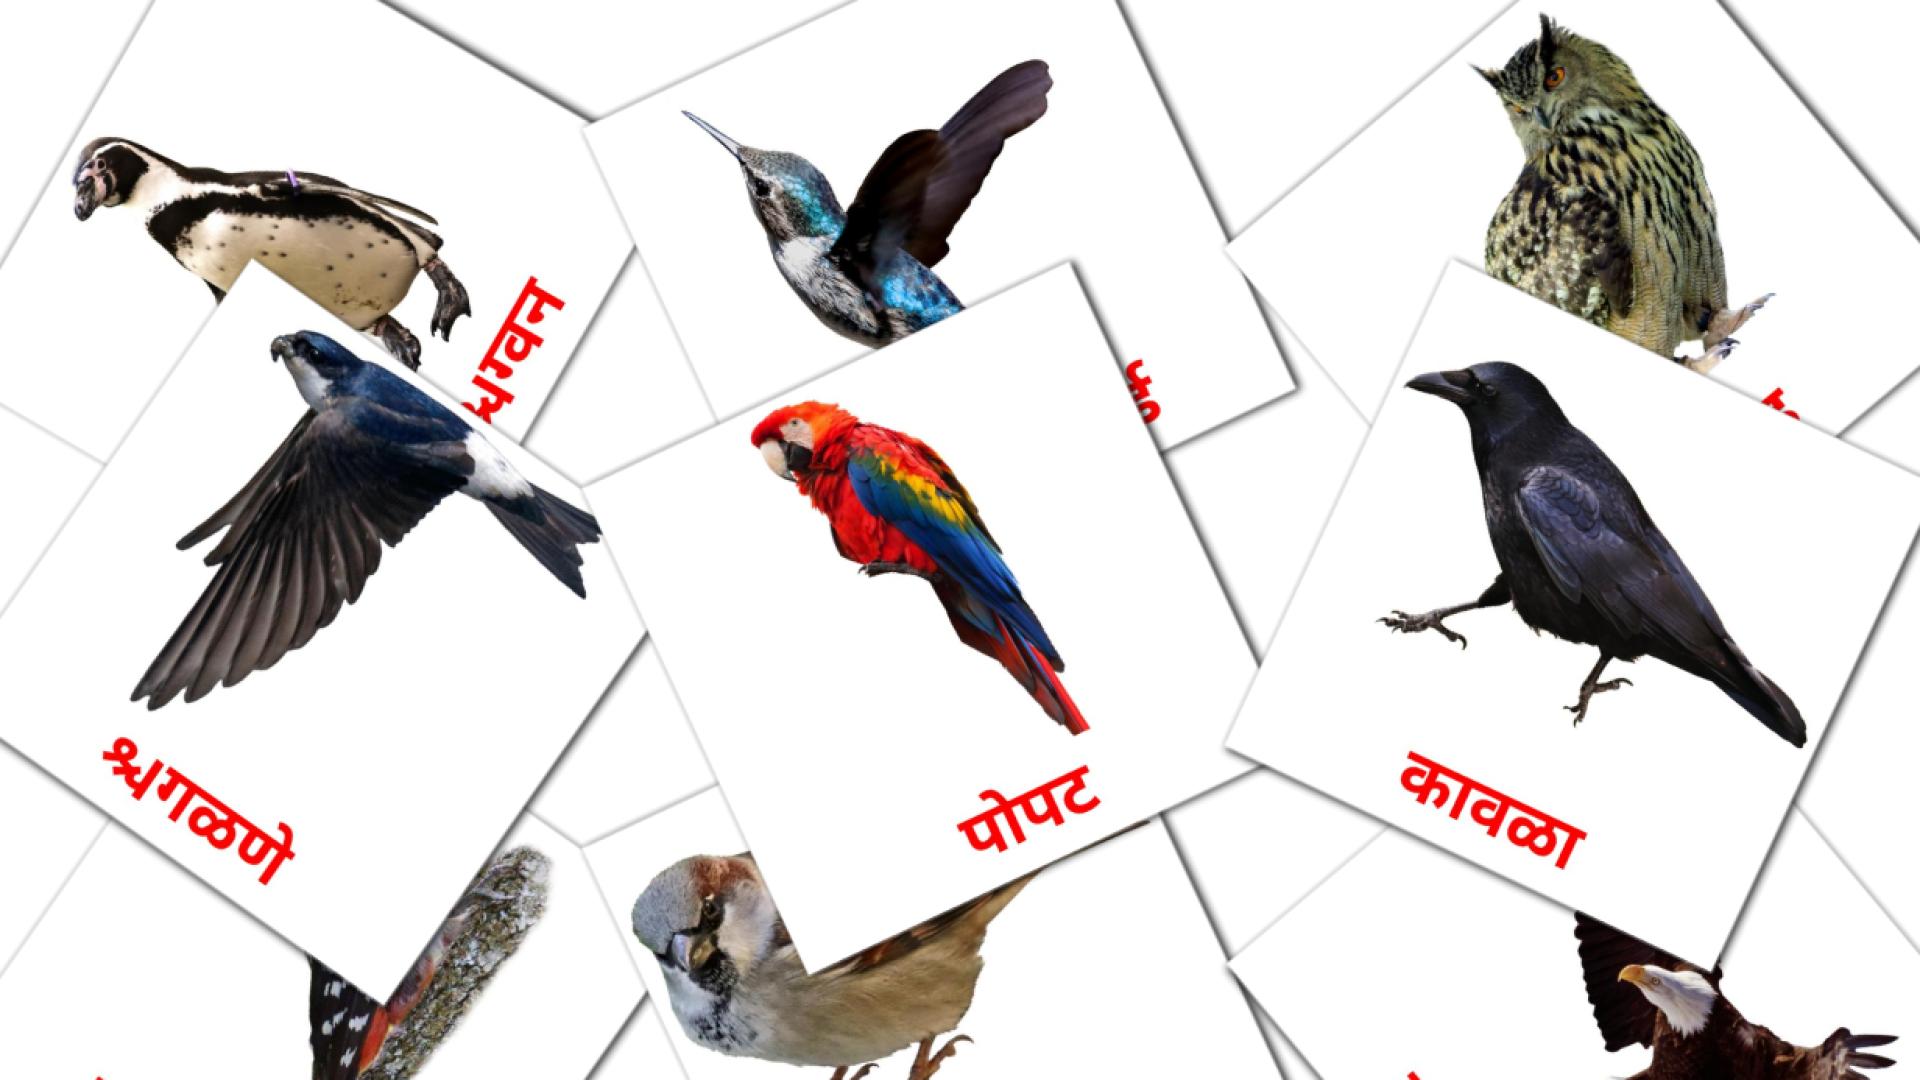 18 Imagiers जंगली पक्षी